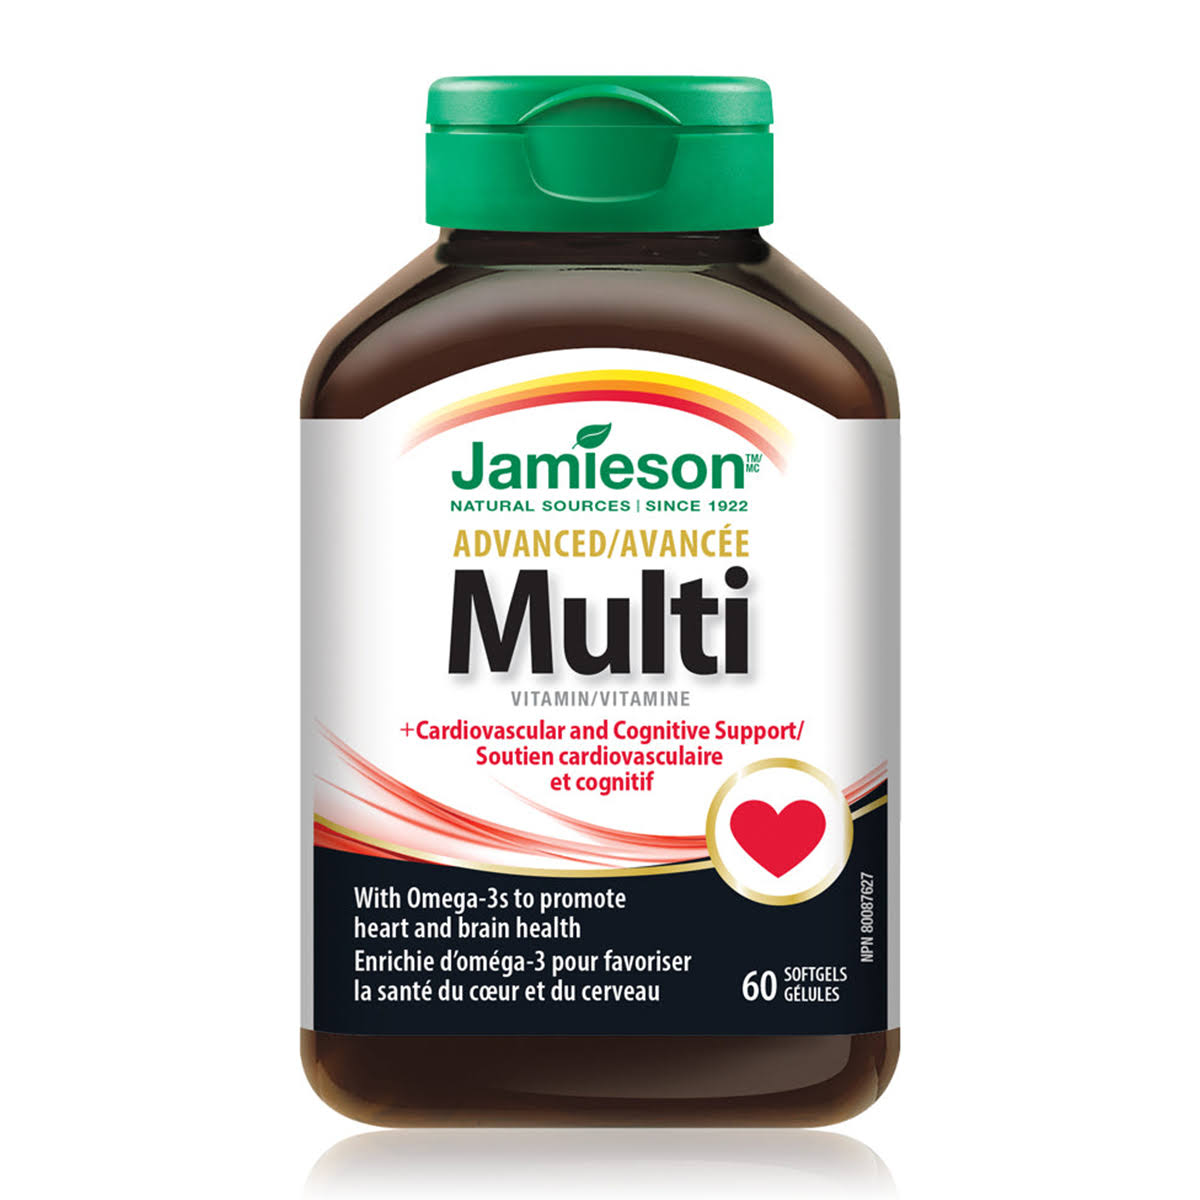 Jamieson Advanced Multi + Omega-3 Supplement - 60ct